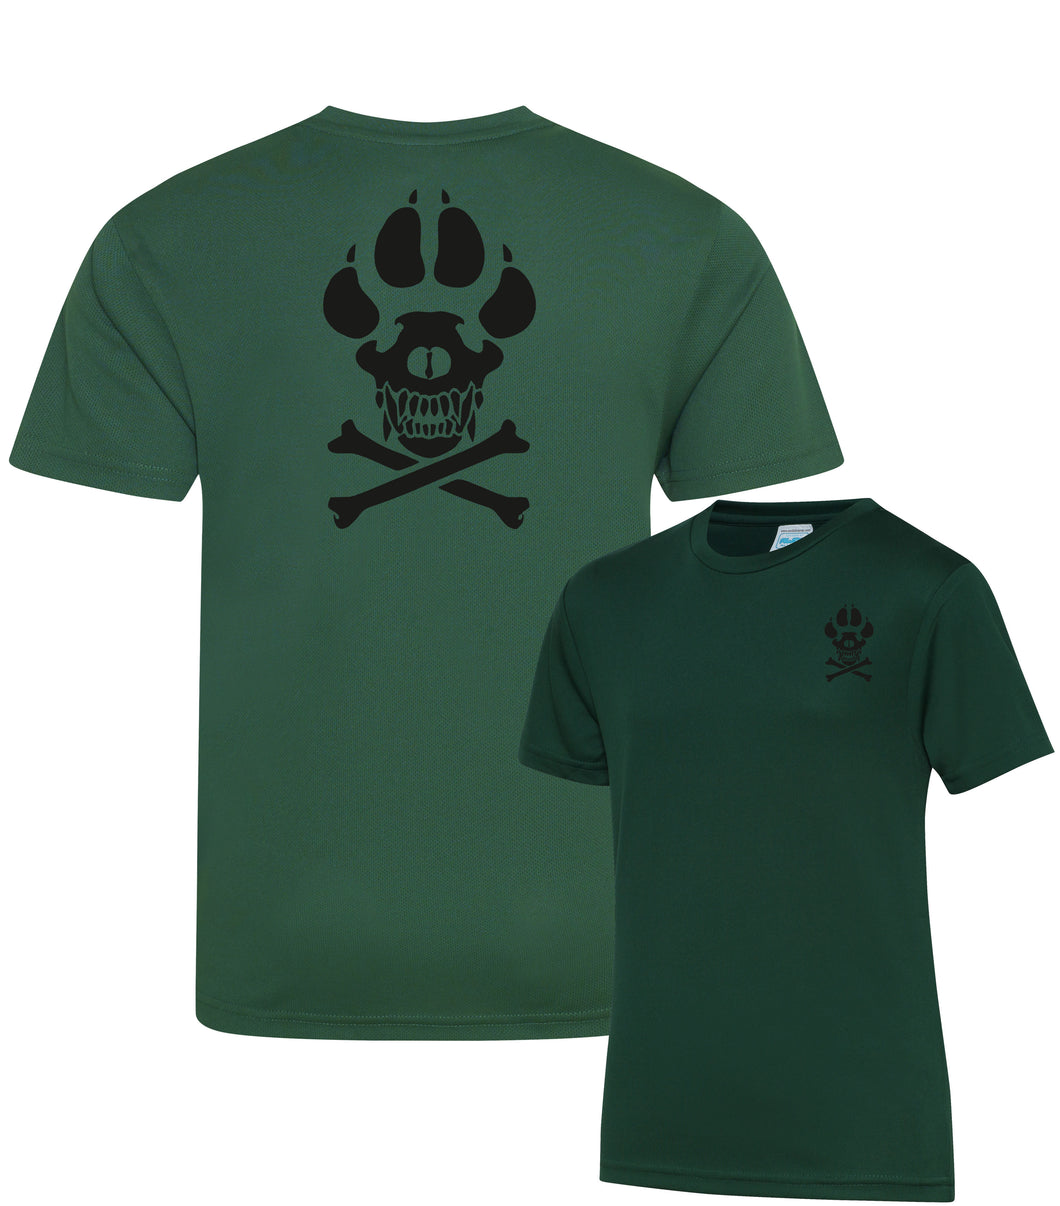 K9 Dog Handler skull & cross bones  - Fully Printed Wicking Fabric T-shirt